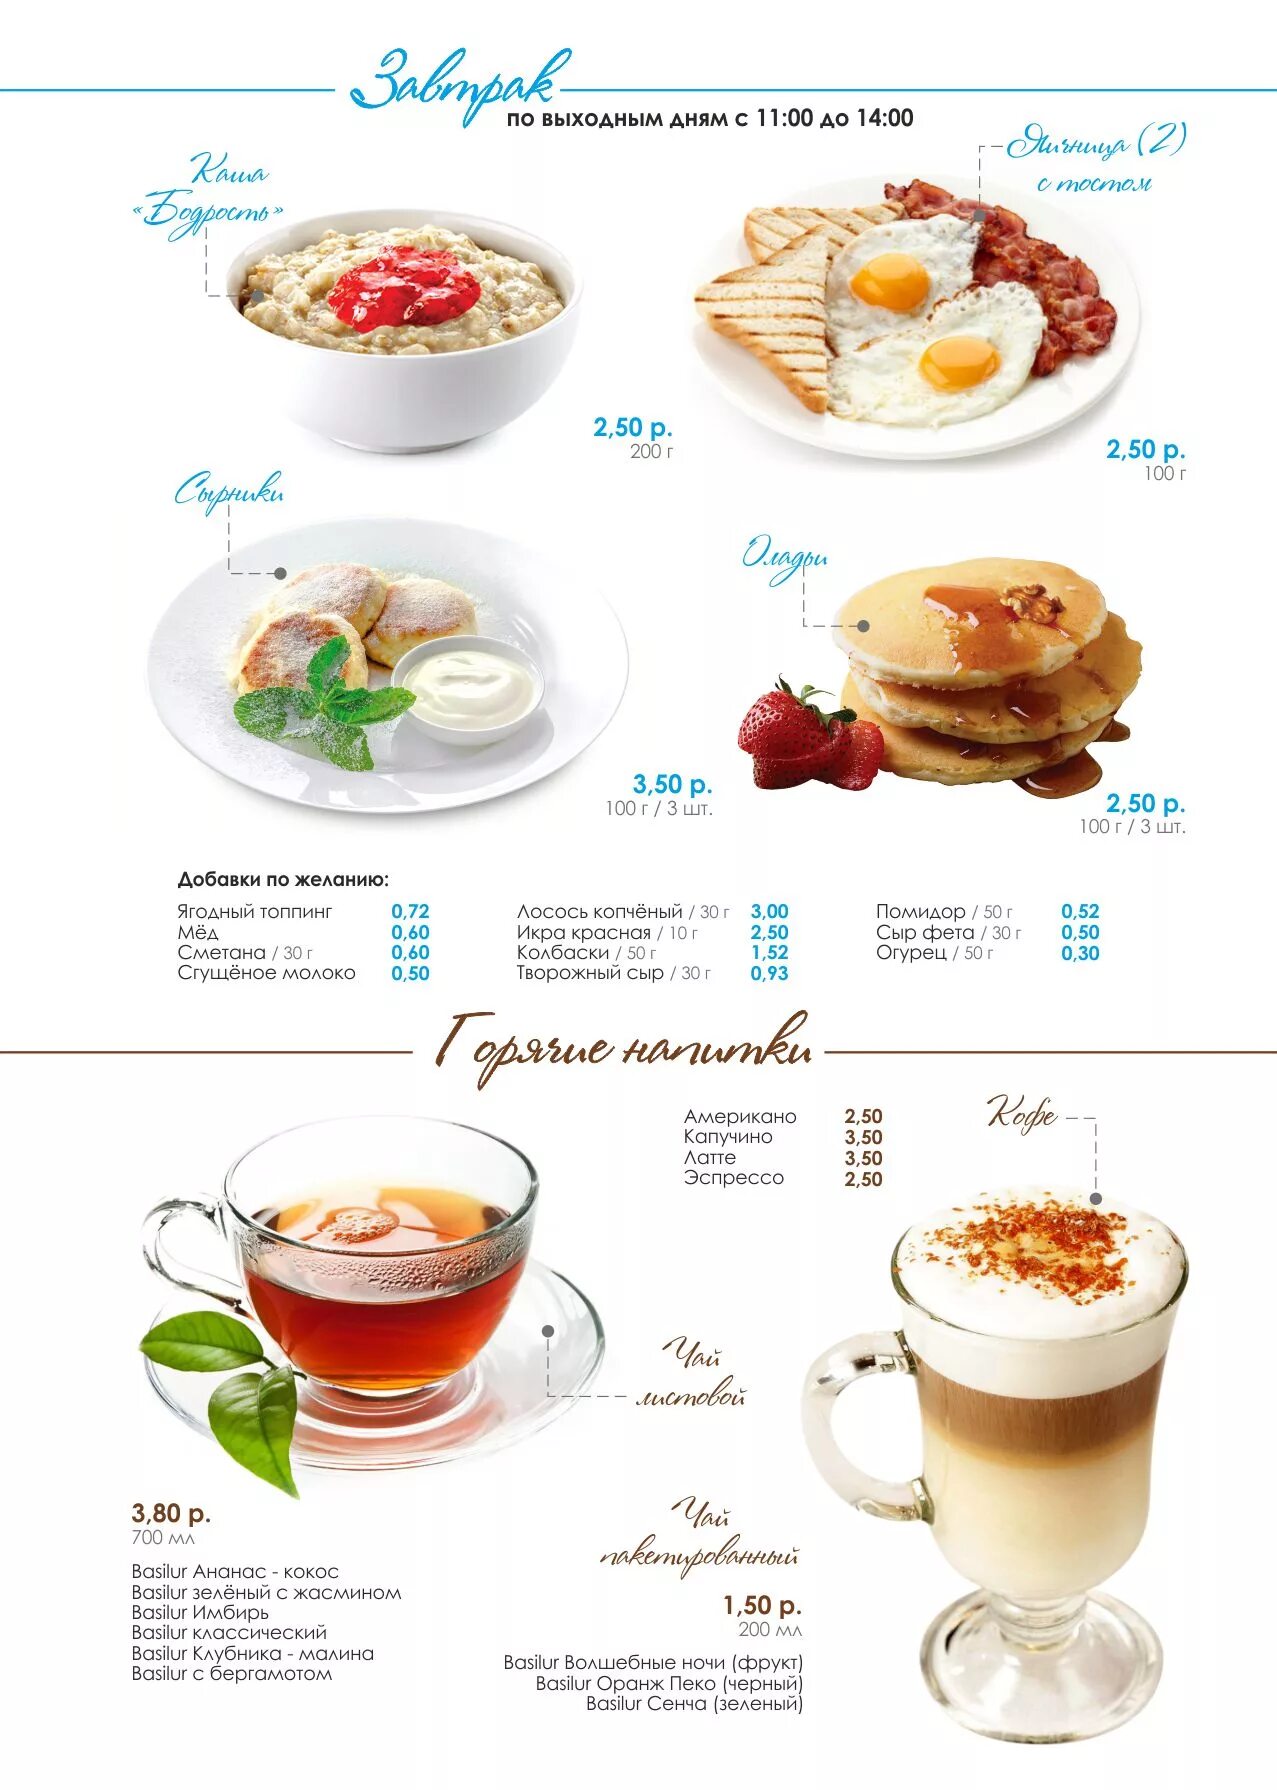 Министерство завтраков нижний меню. Меню завтраков. Завтраки в кафе меню. Завтраки в кофейне меню. Завтрак в отеле меню.